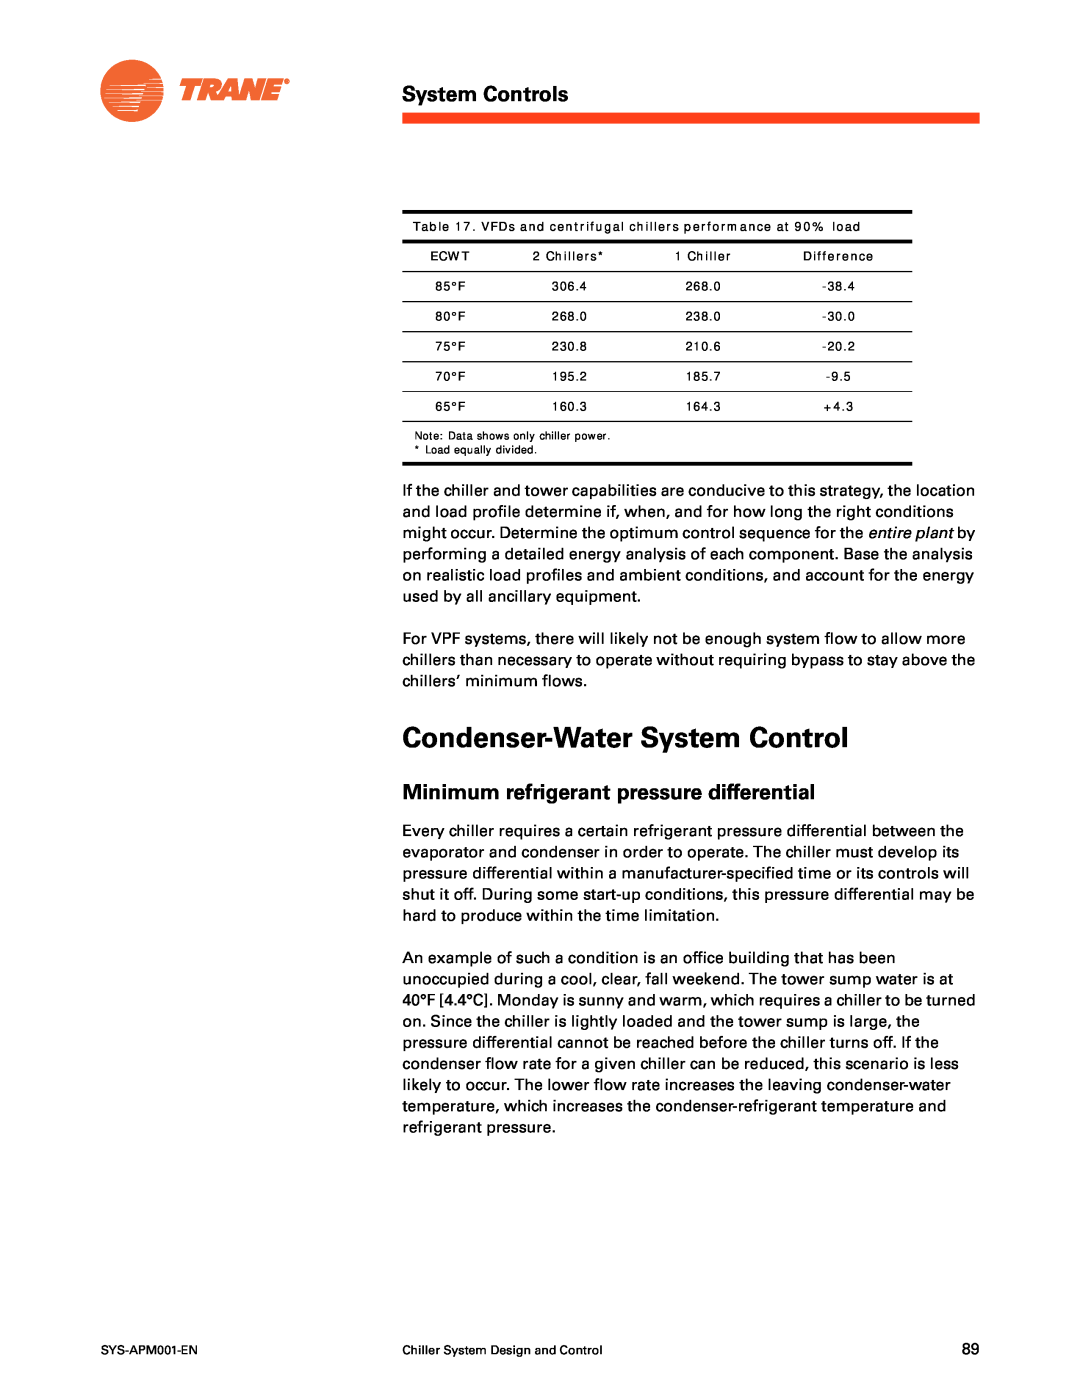 Trane SYS-APM001-EN manual Condenser-Water System Control, Minimum refrigerant pressure differential, System Controls, Ecwt 